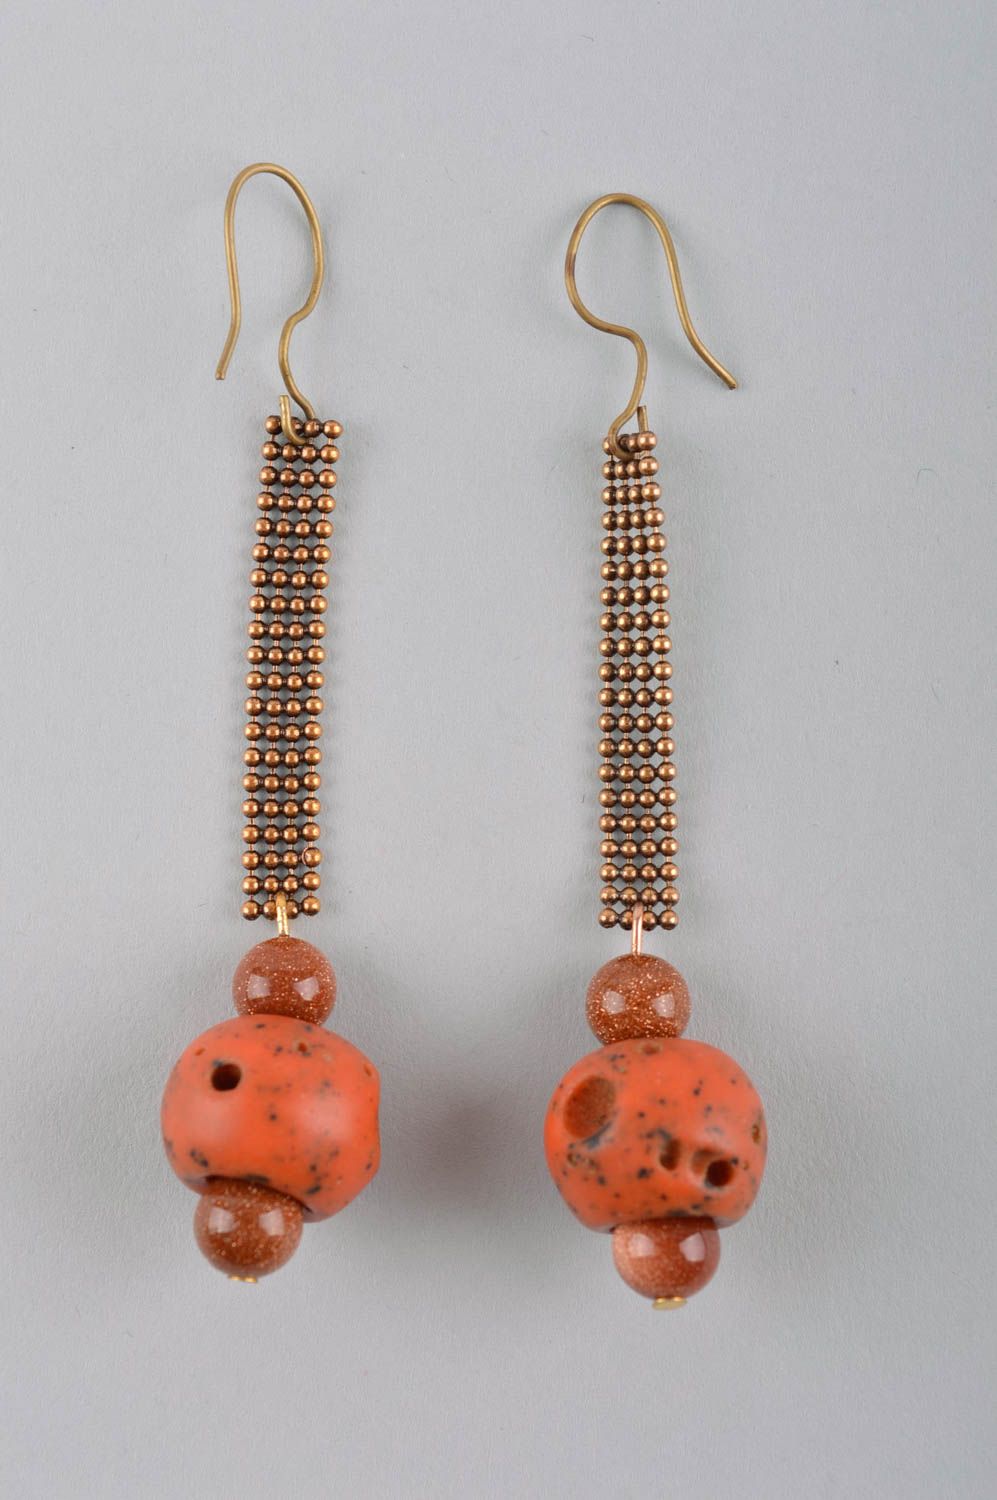 Handmade earrings fashion jewelry earrings for women designer accessories photo 3